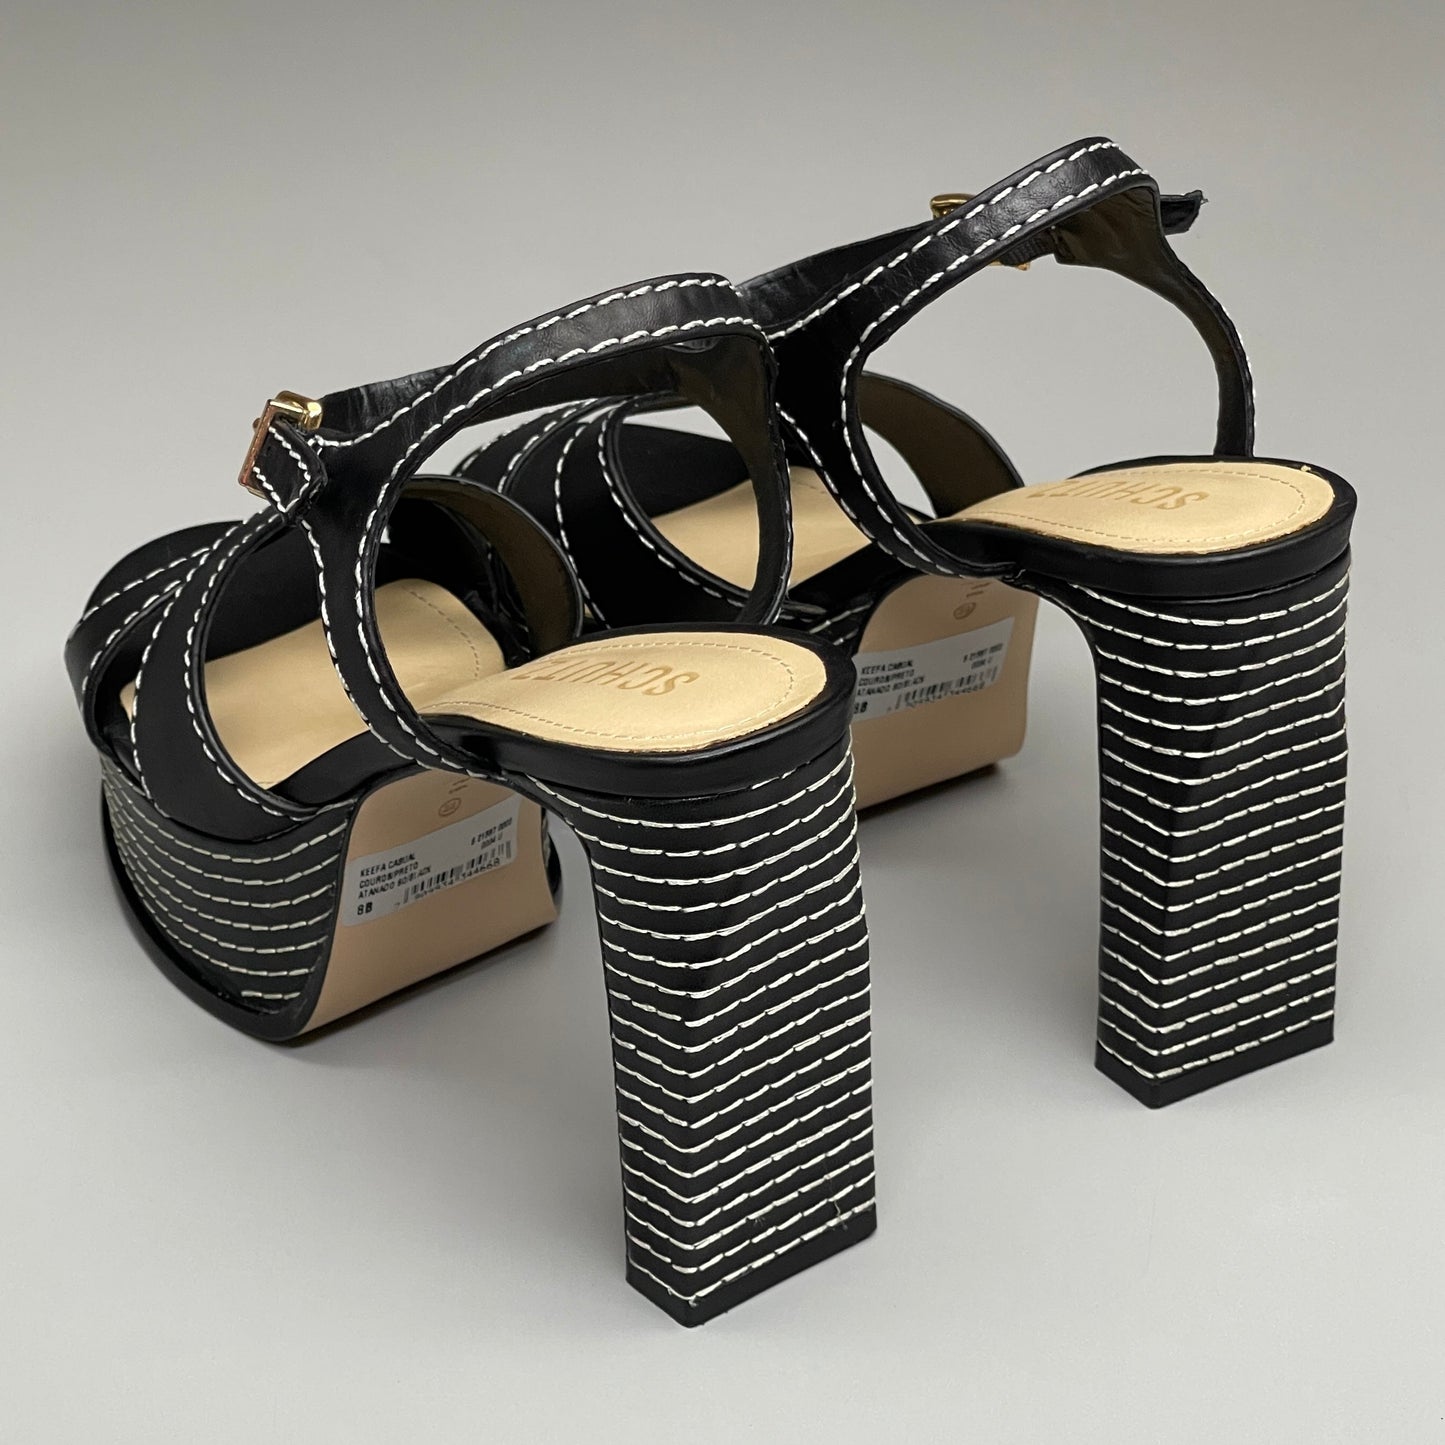 SCHUTZ Keefa Casual Women's Leather Sandal Black Platform 4" Heel Shoes Sz 6B (New)